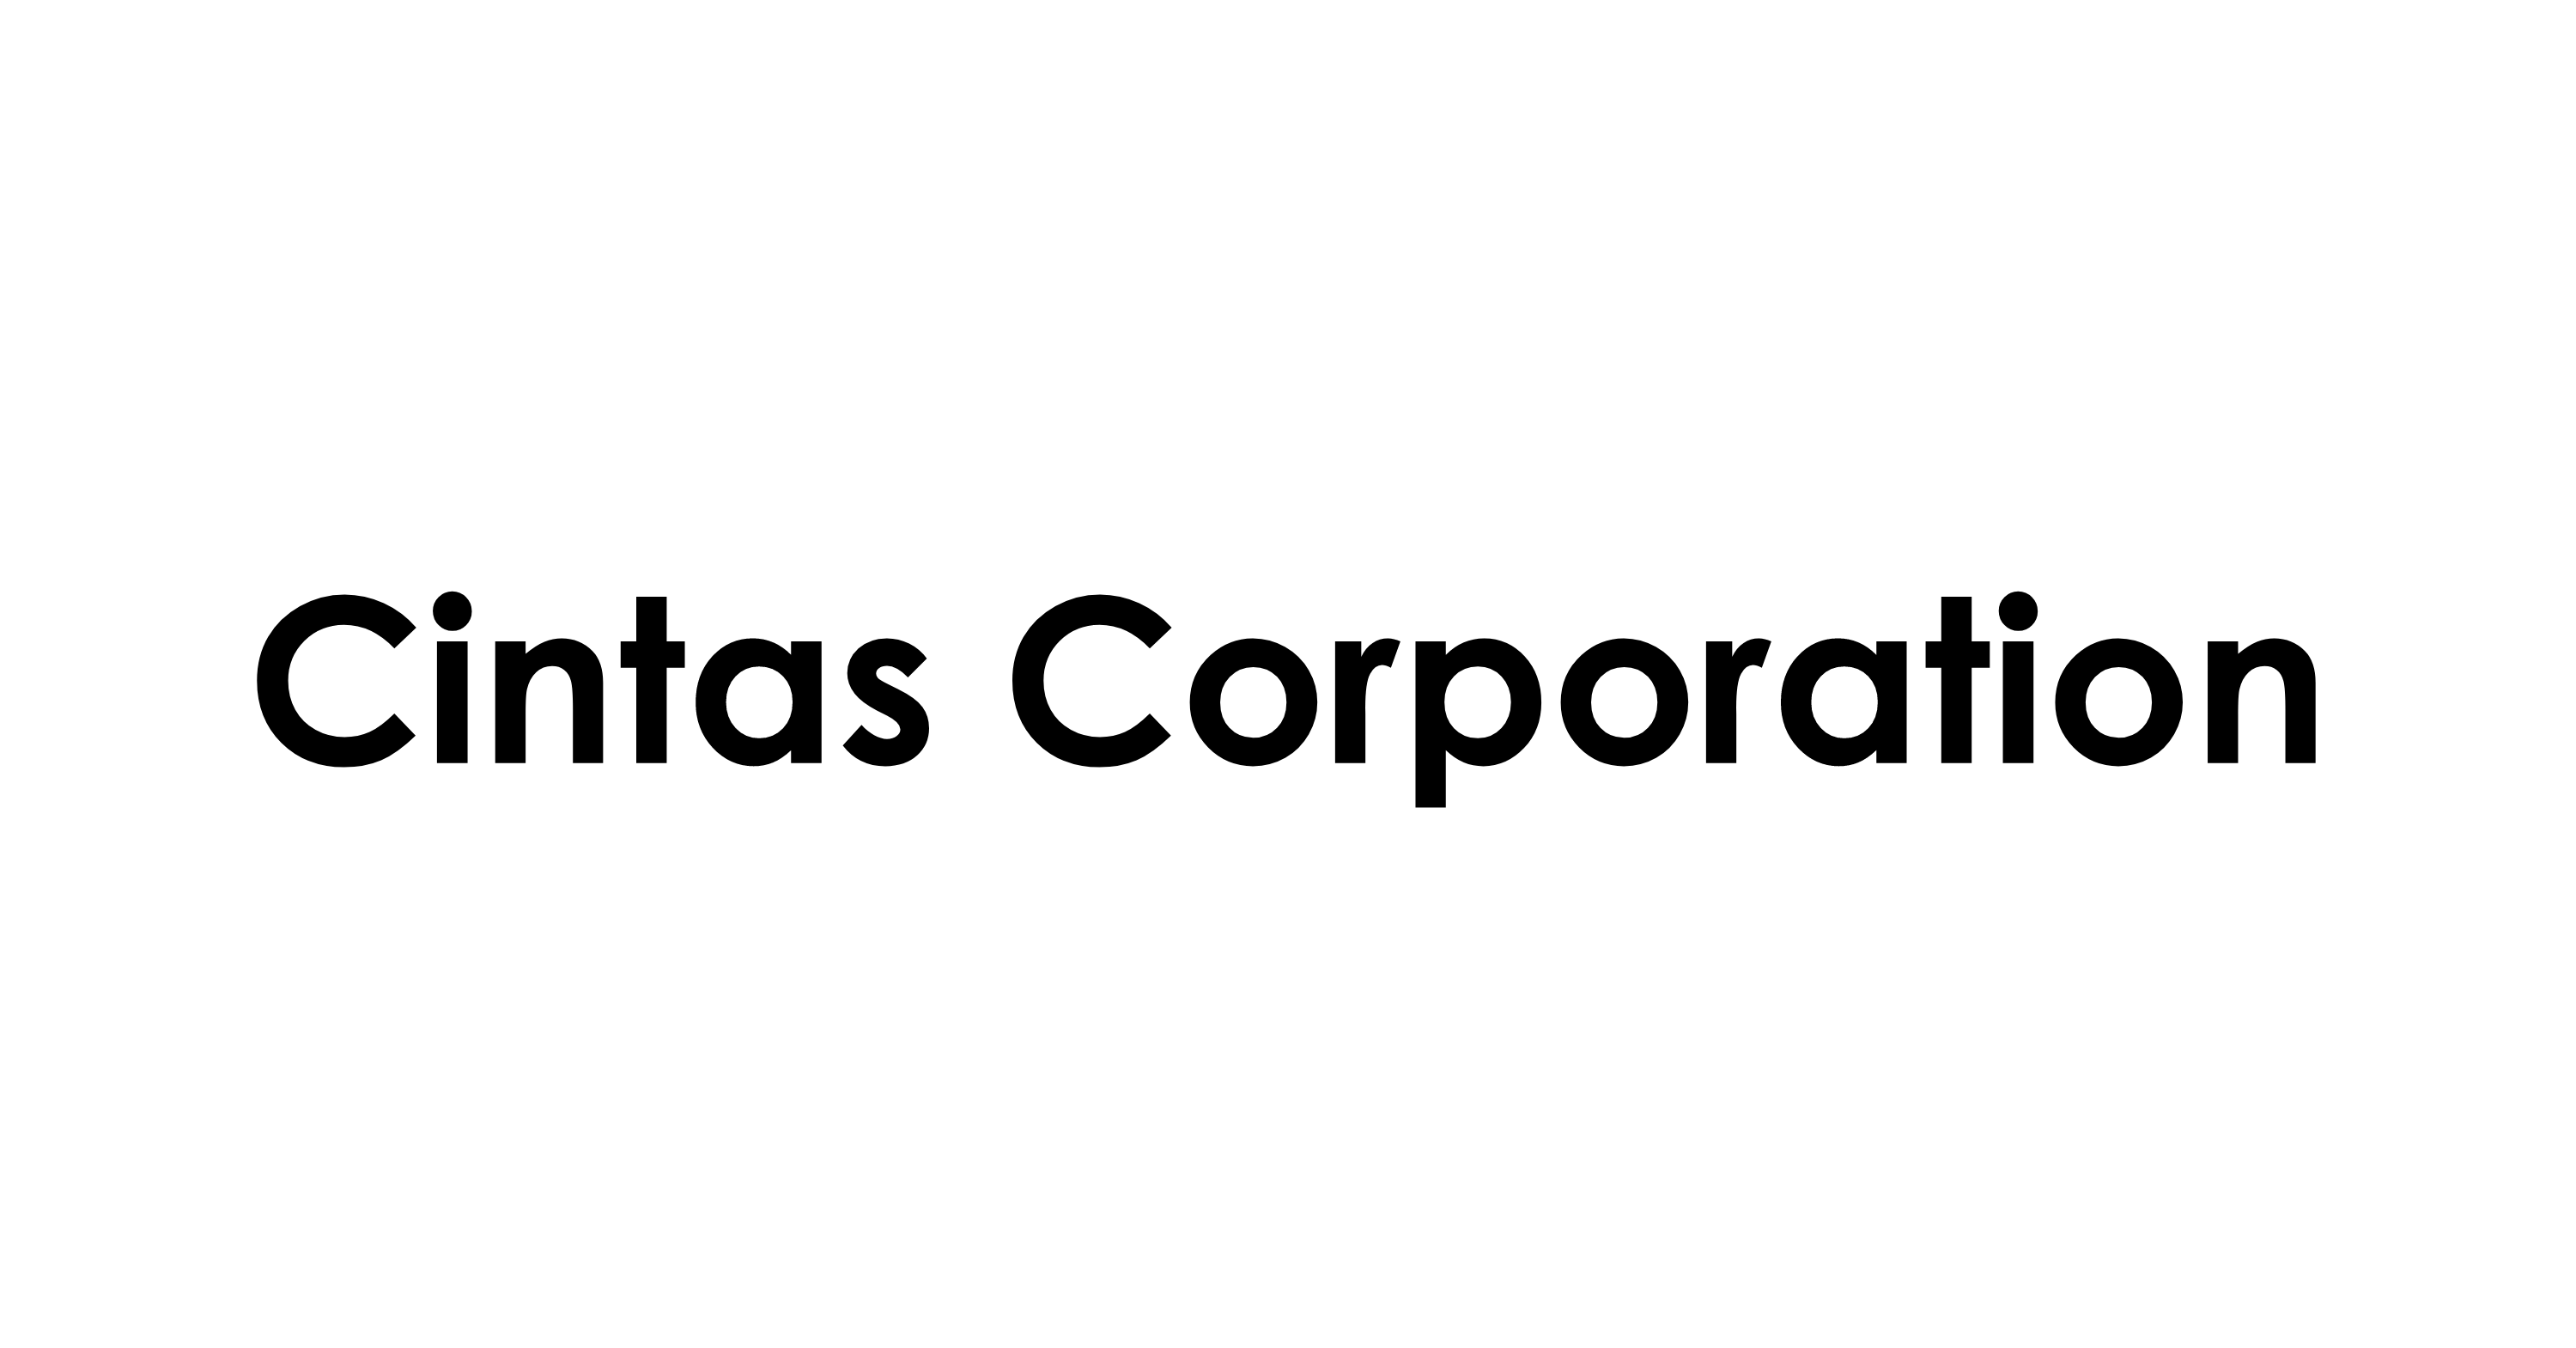 Cintas Corporation